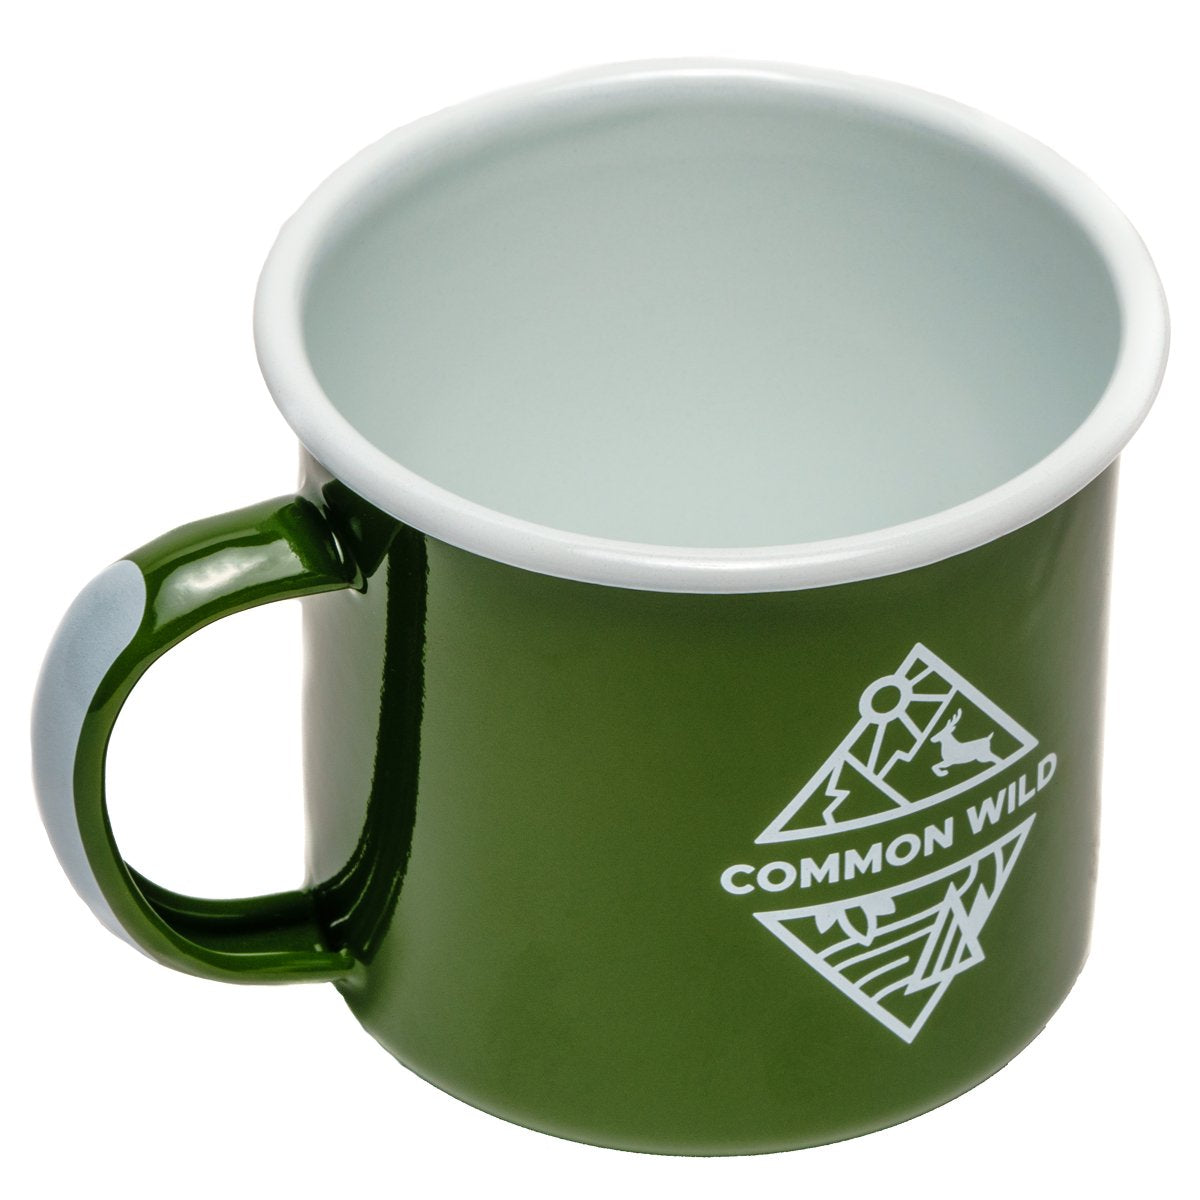 Common Wild Camp Mug